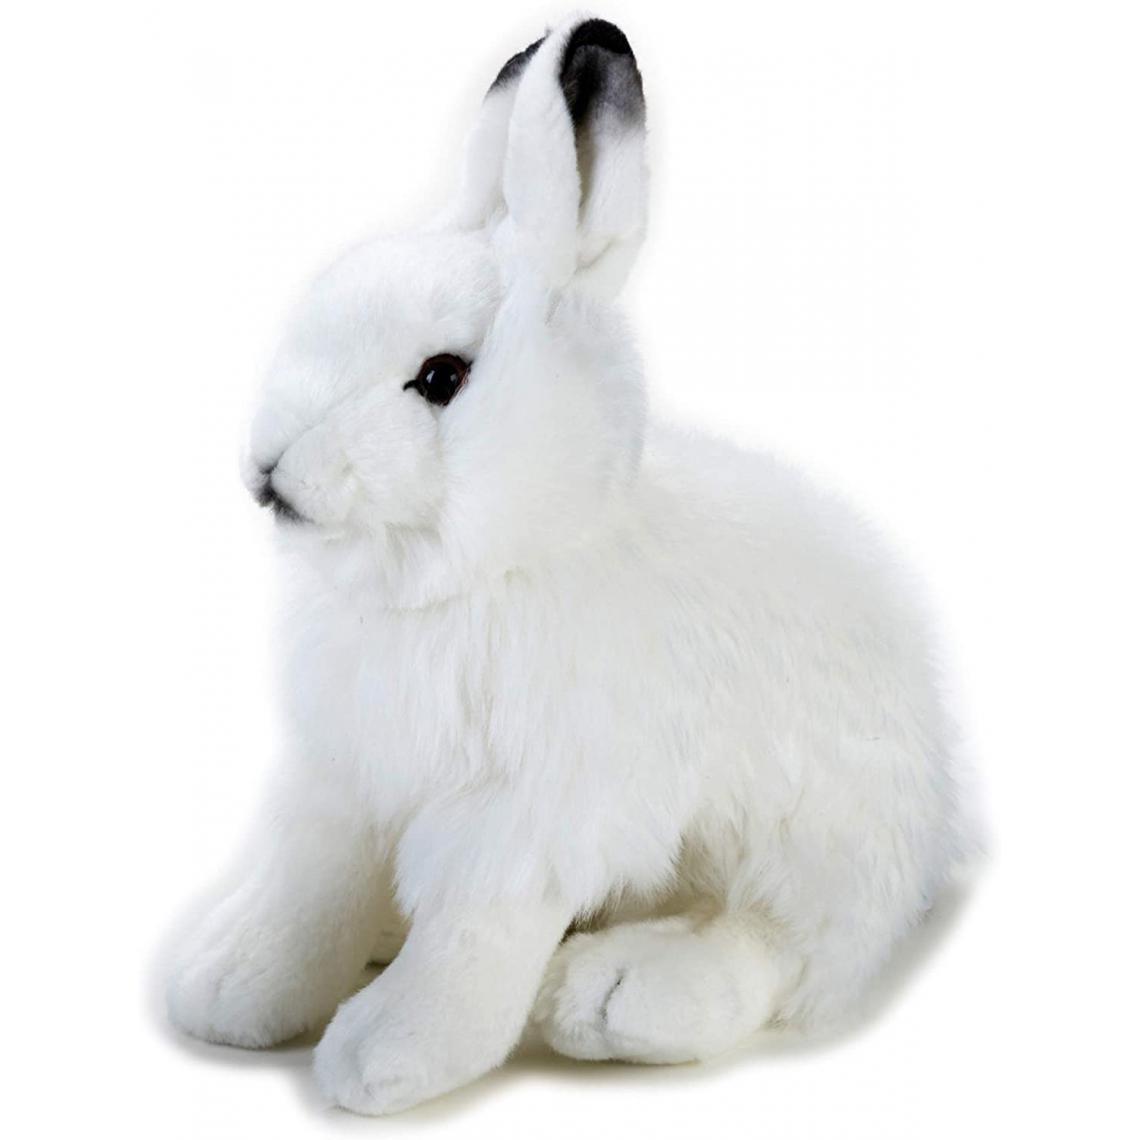 National Geographic - peluche lapin de 25 cm blanc - Animaux